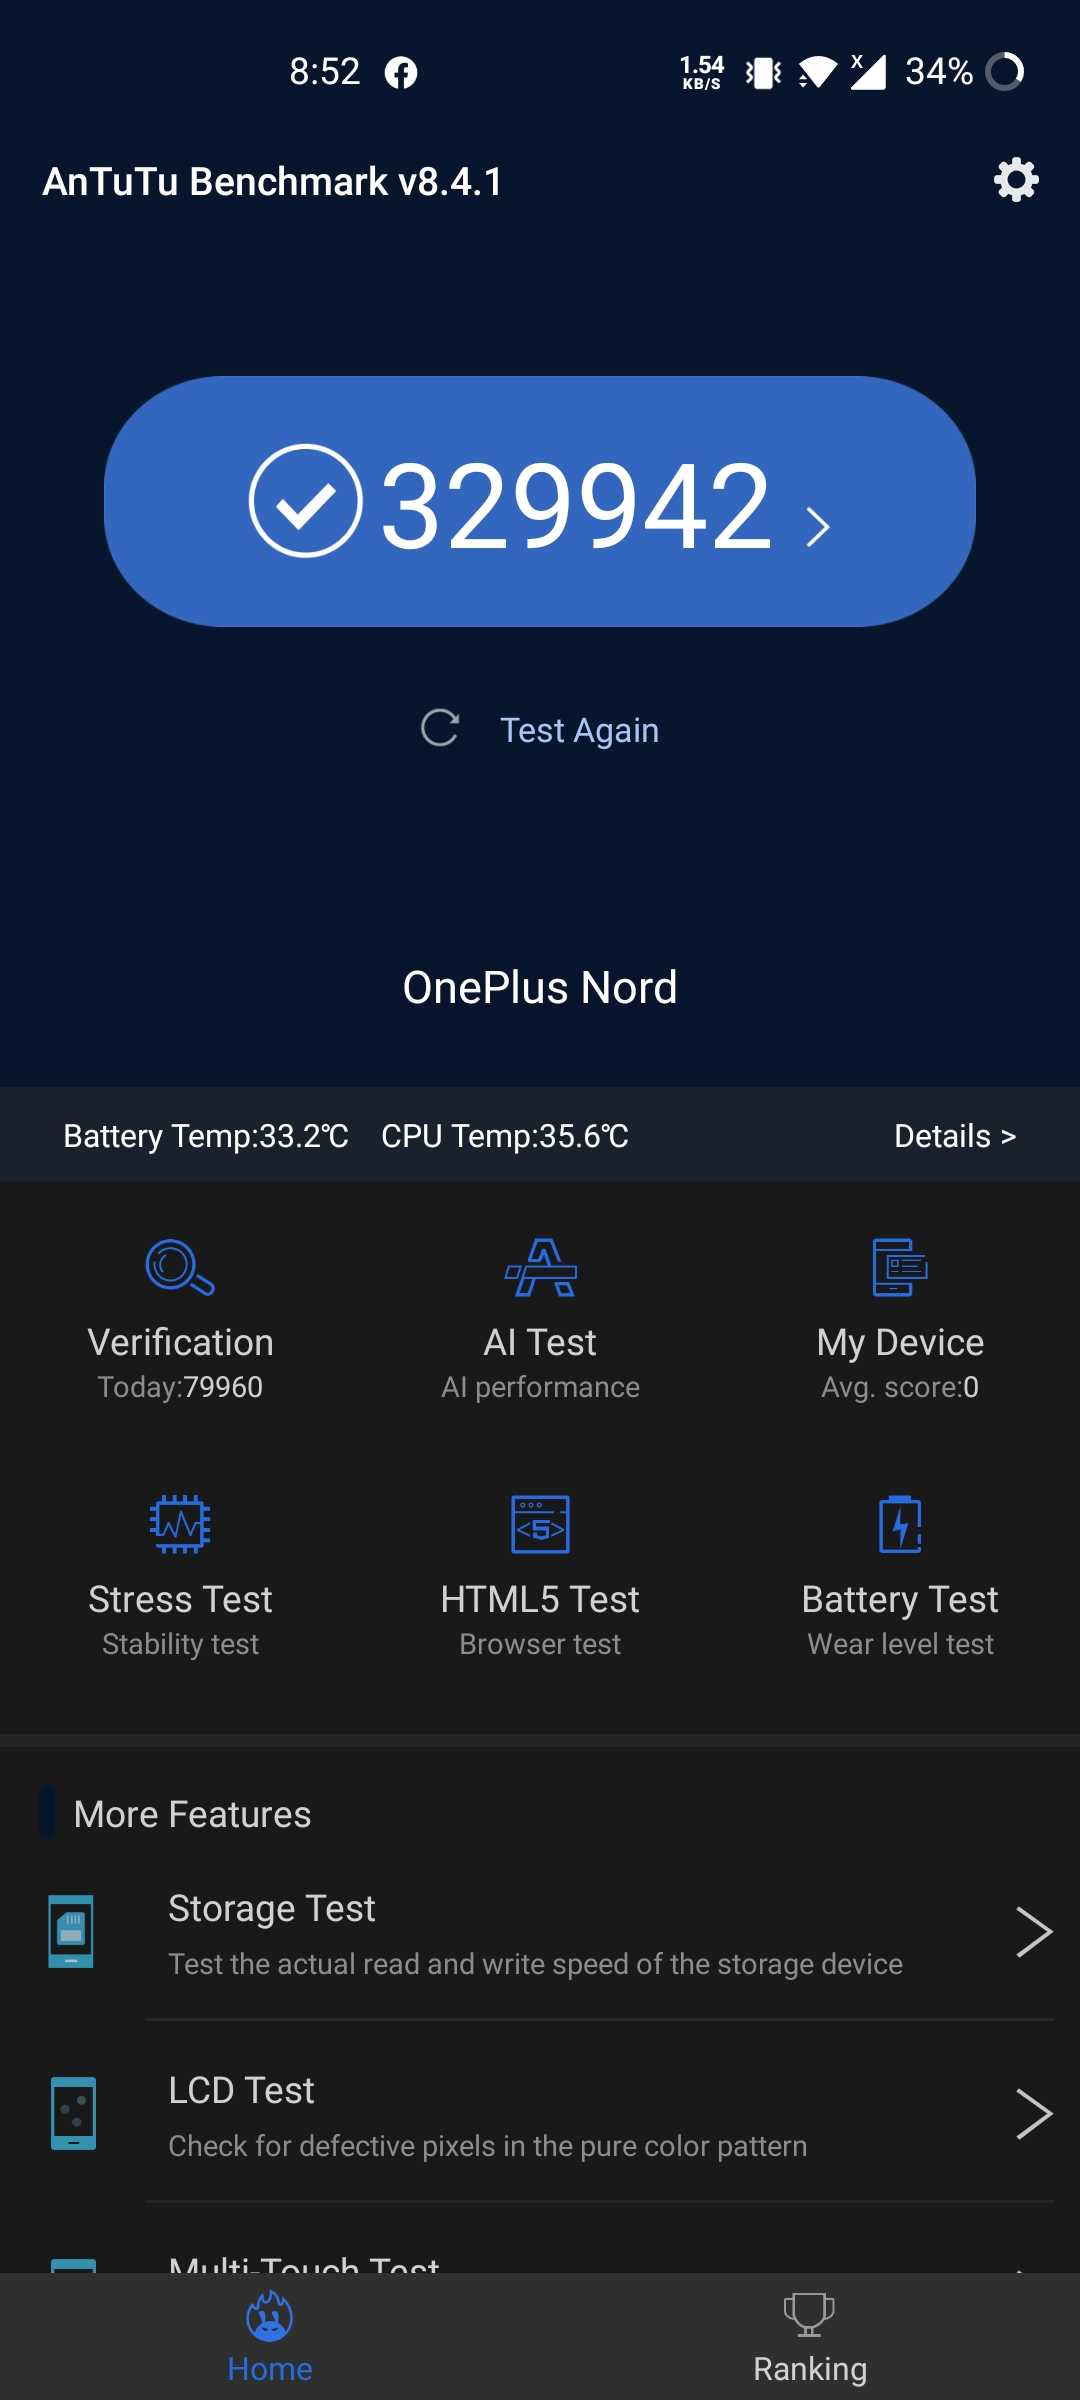 AnTuTu benchmark test on OnePlus Nord